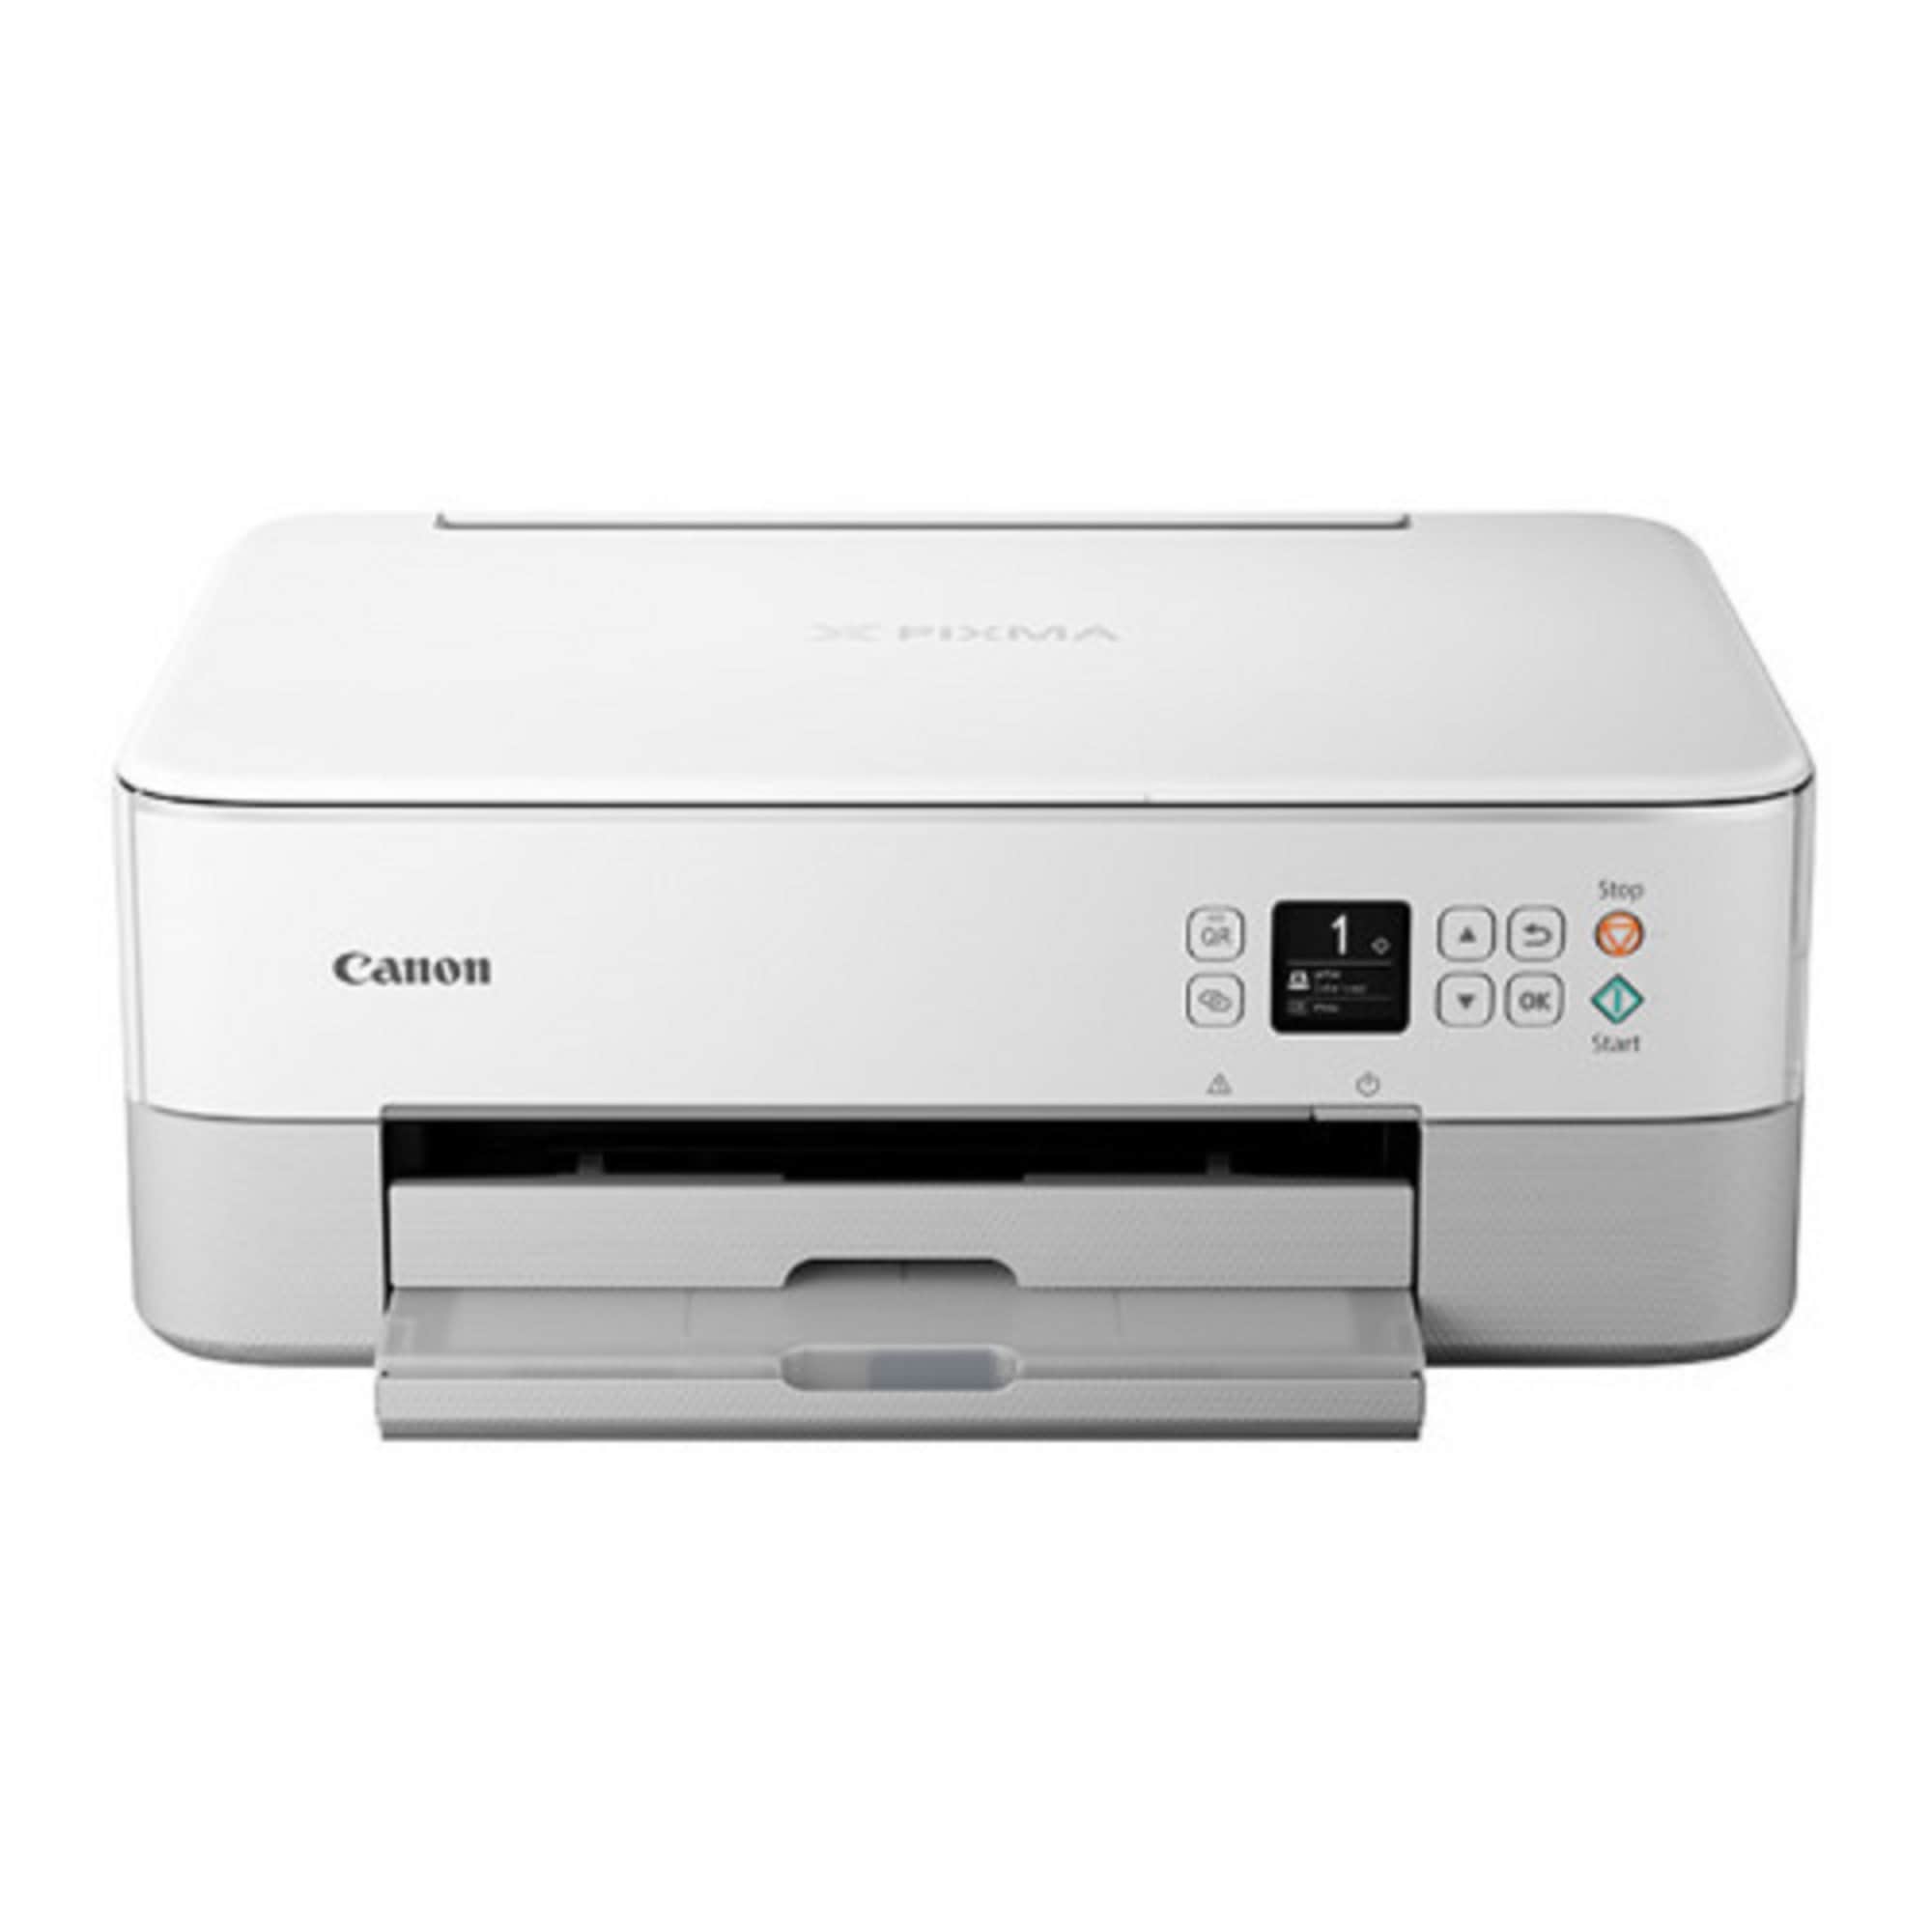 Canon PIXMA TS6420 Wireless Inkjet All-In-One Printer (White) - White